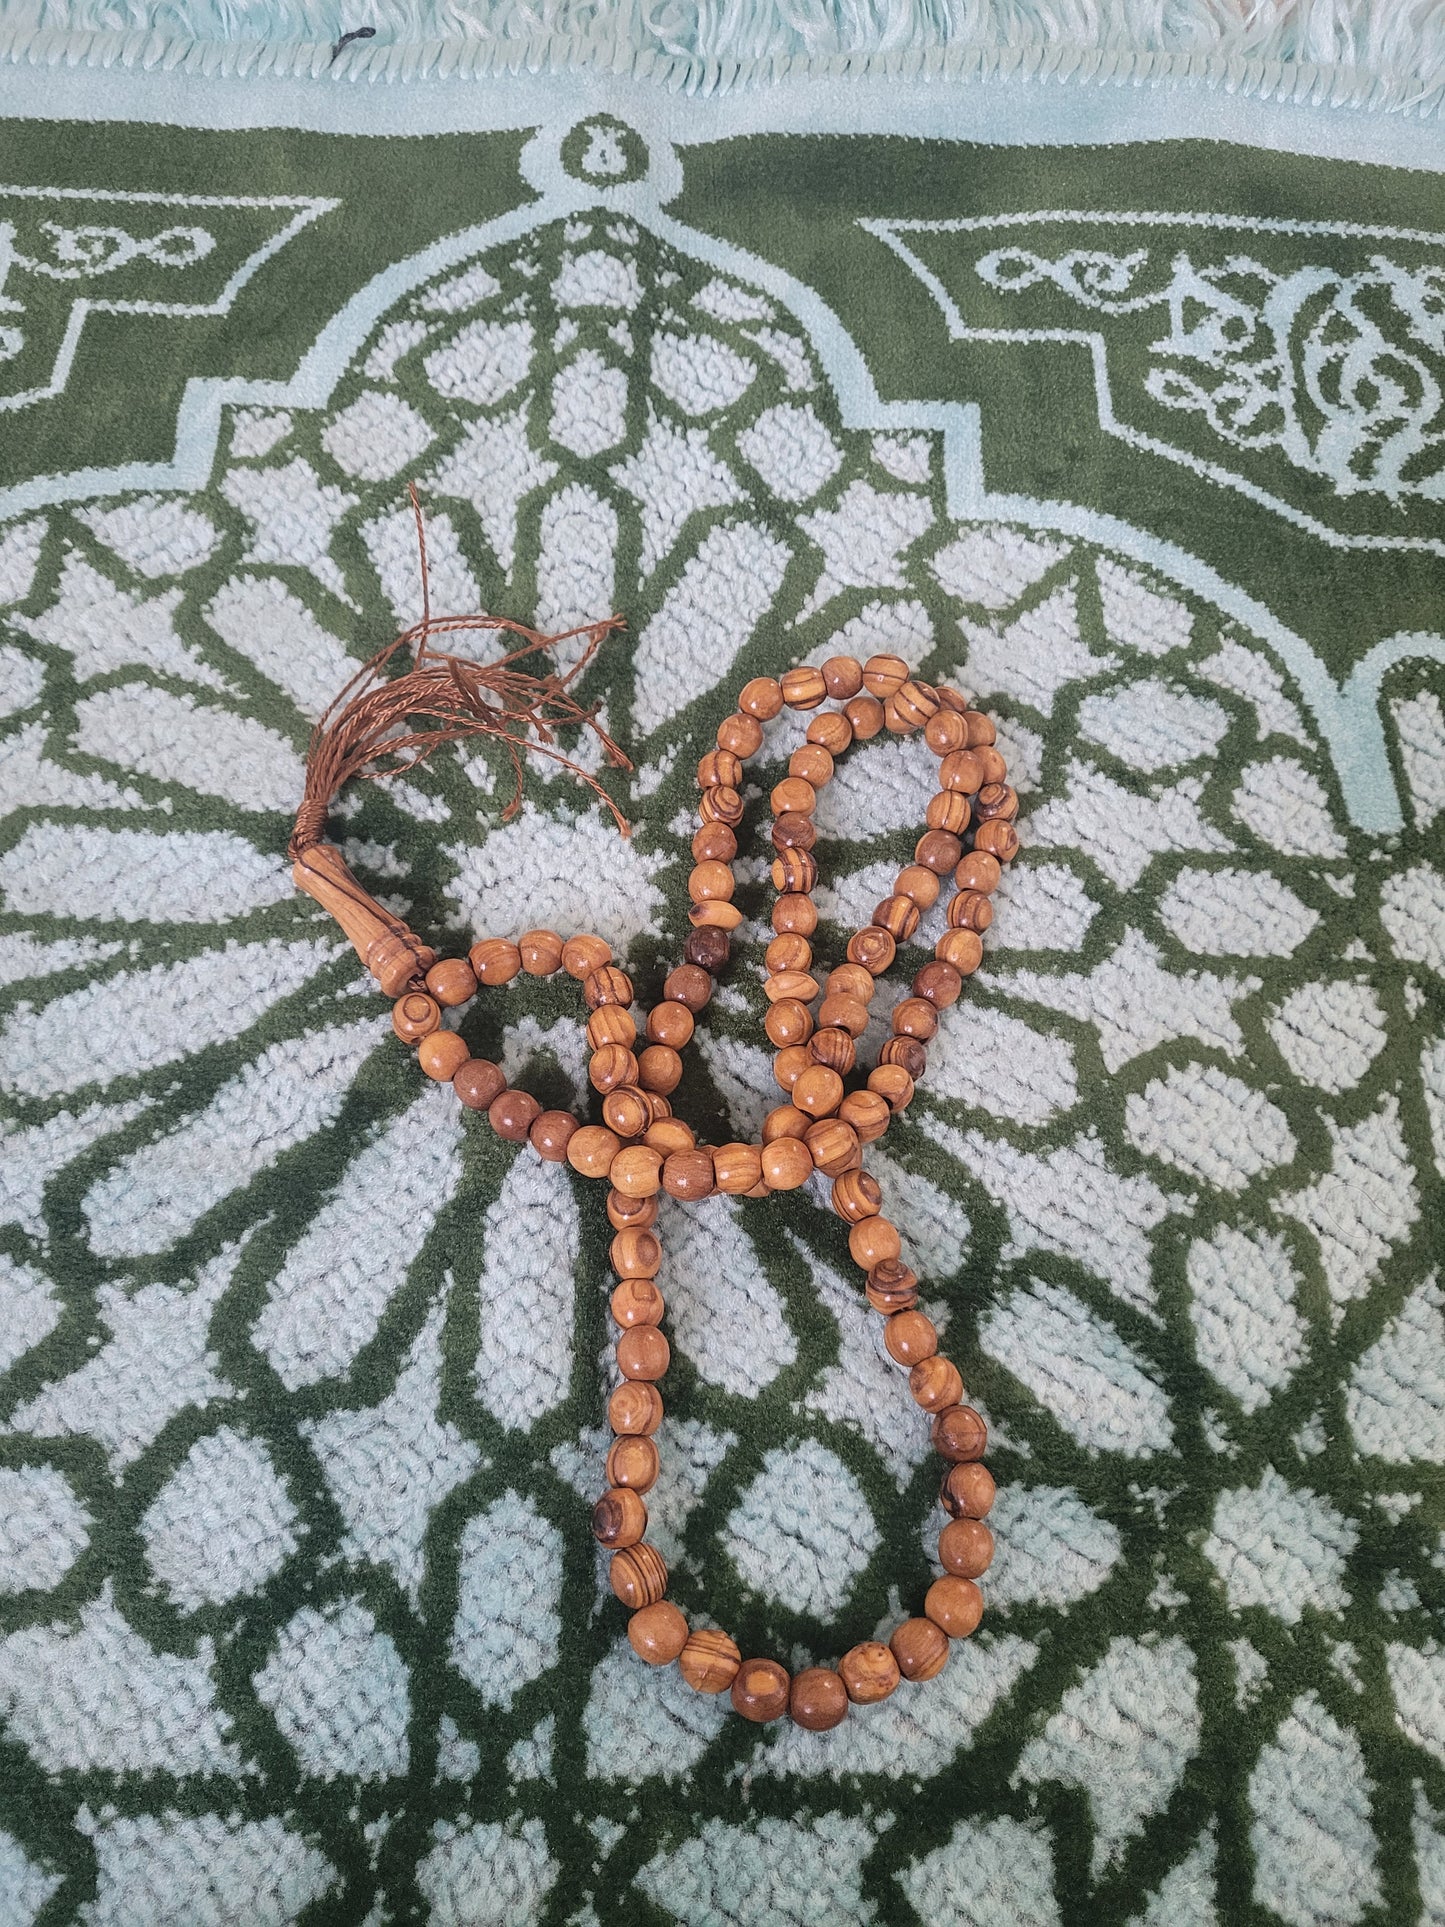 99 Beads Palestinian Olive Wood Prayer Beads